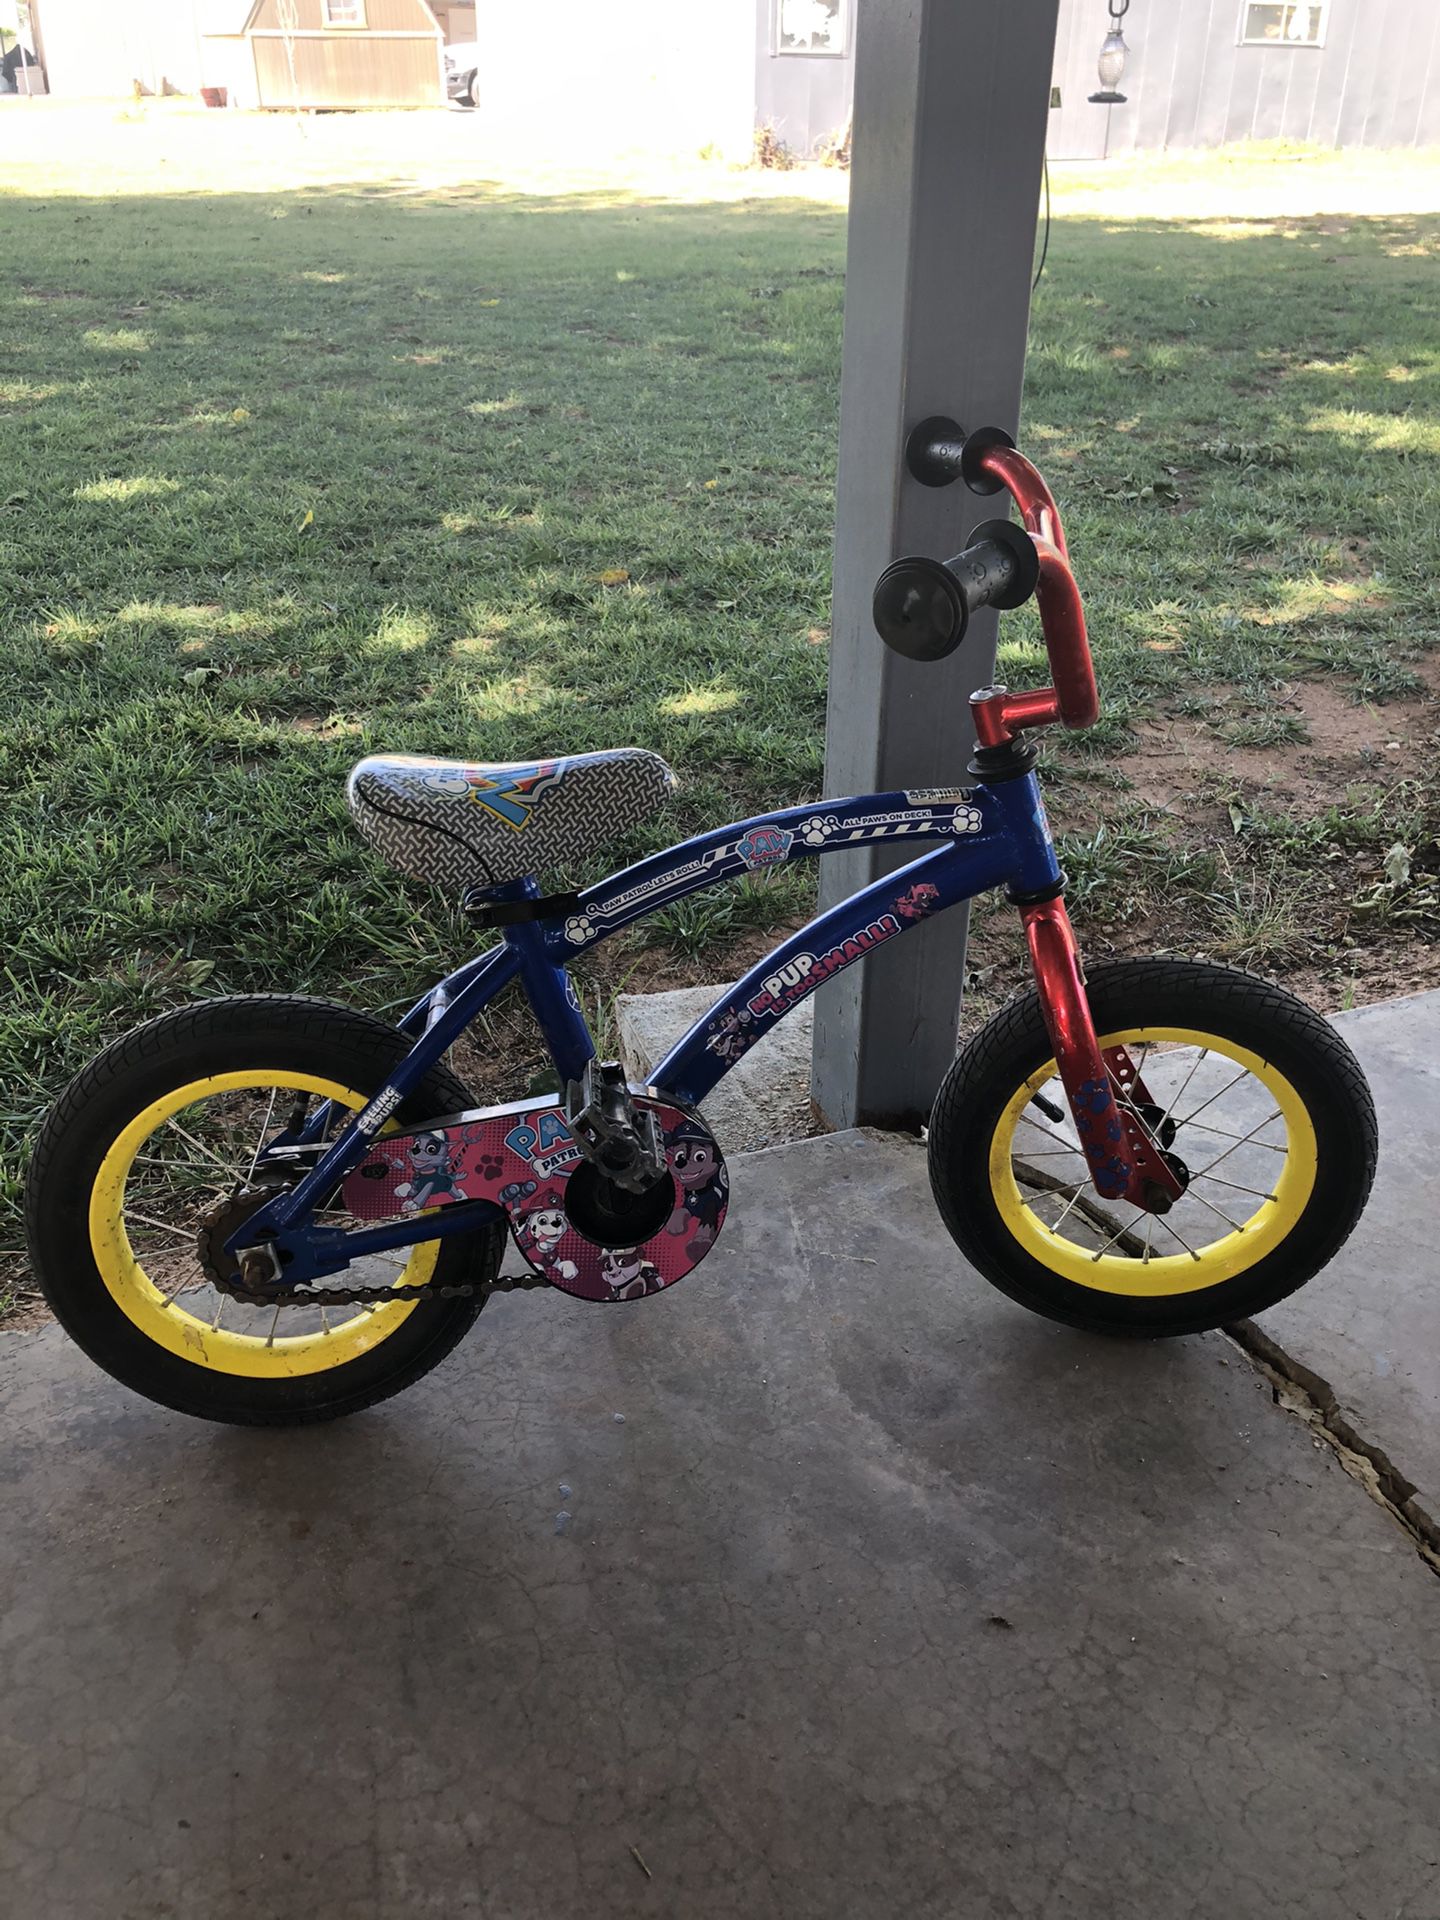 Kids 12 inch bike, no training wheels.